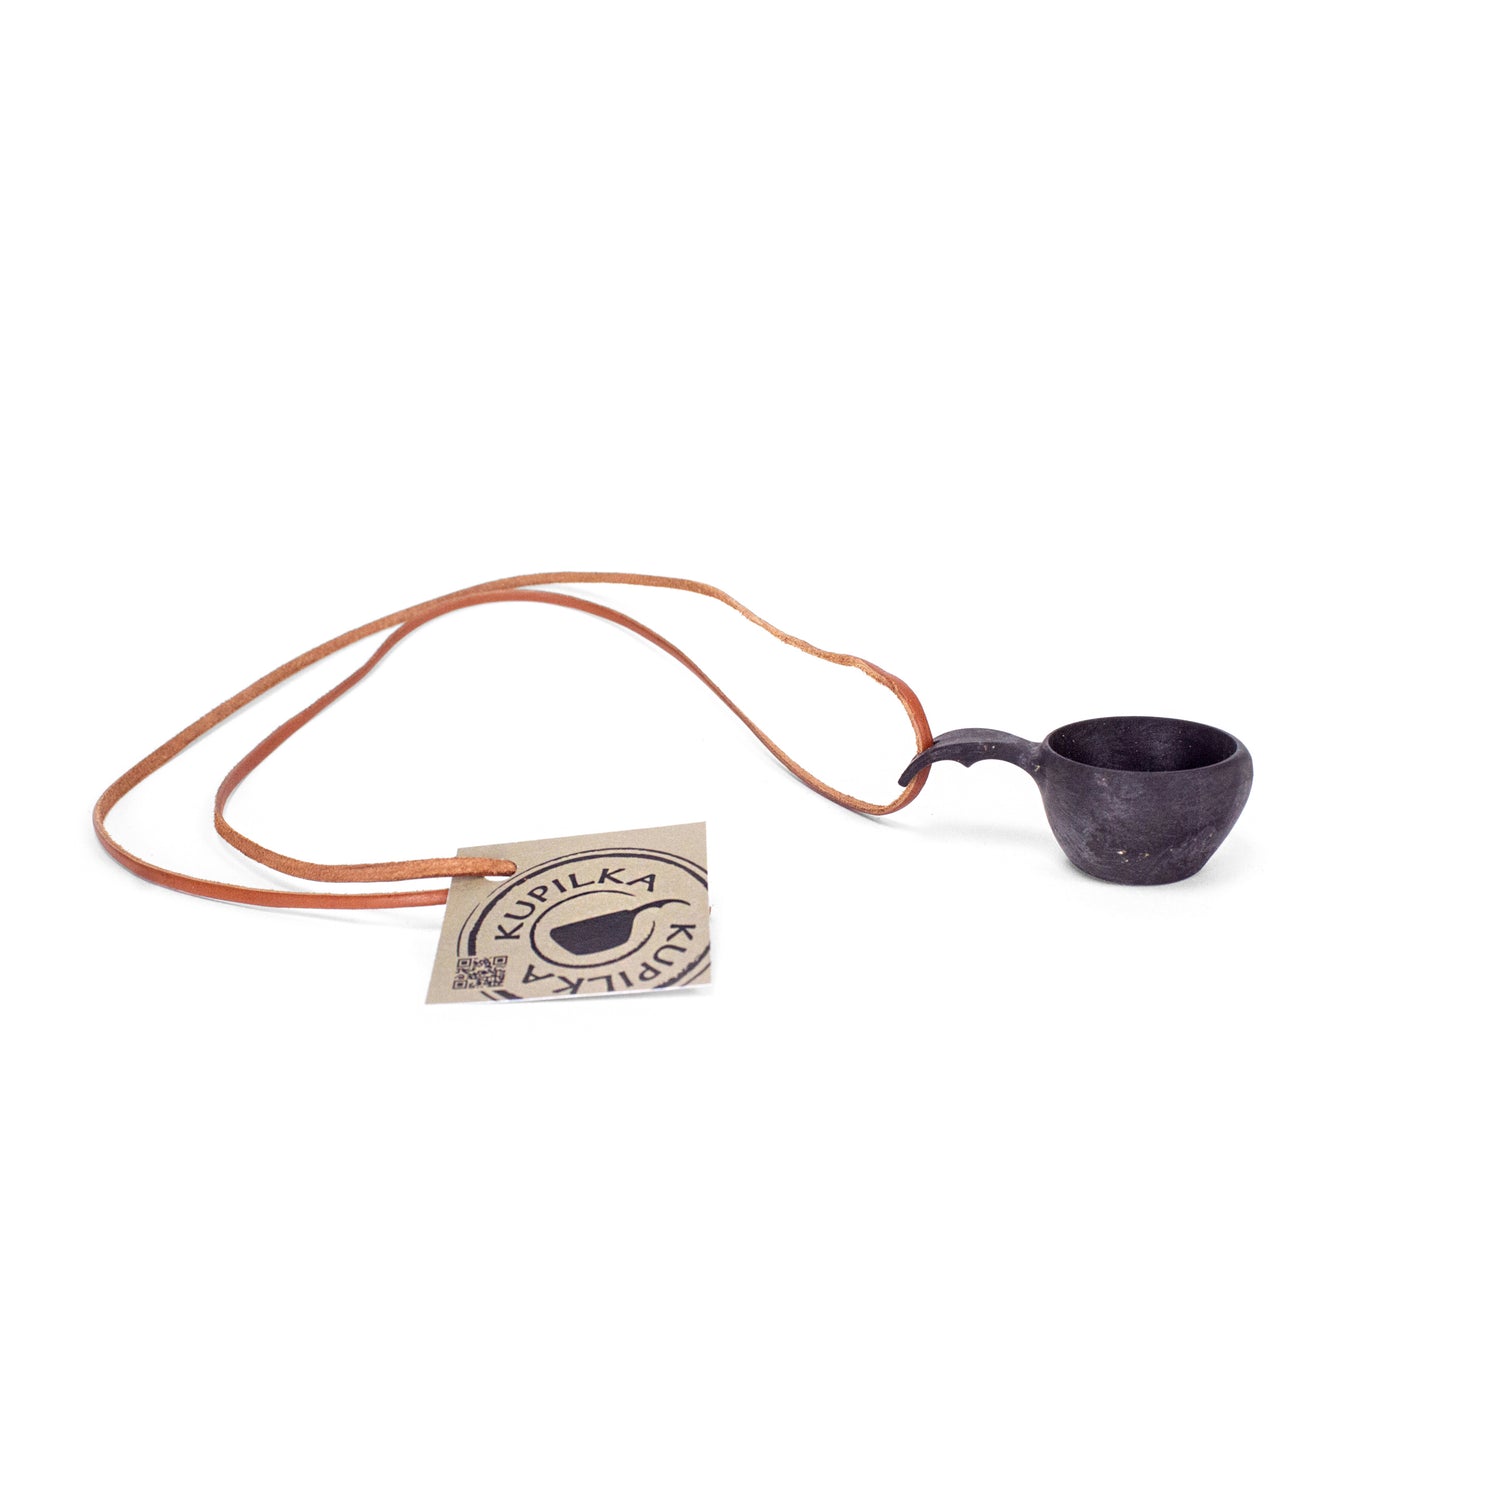 KUPILKA 1 MINI - with reindeer leather cord